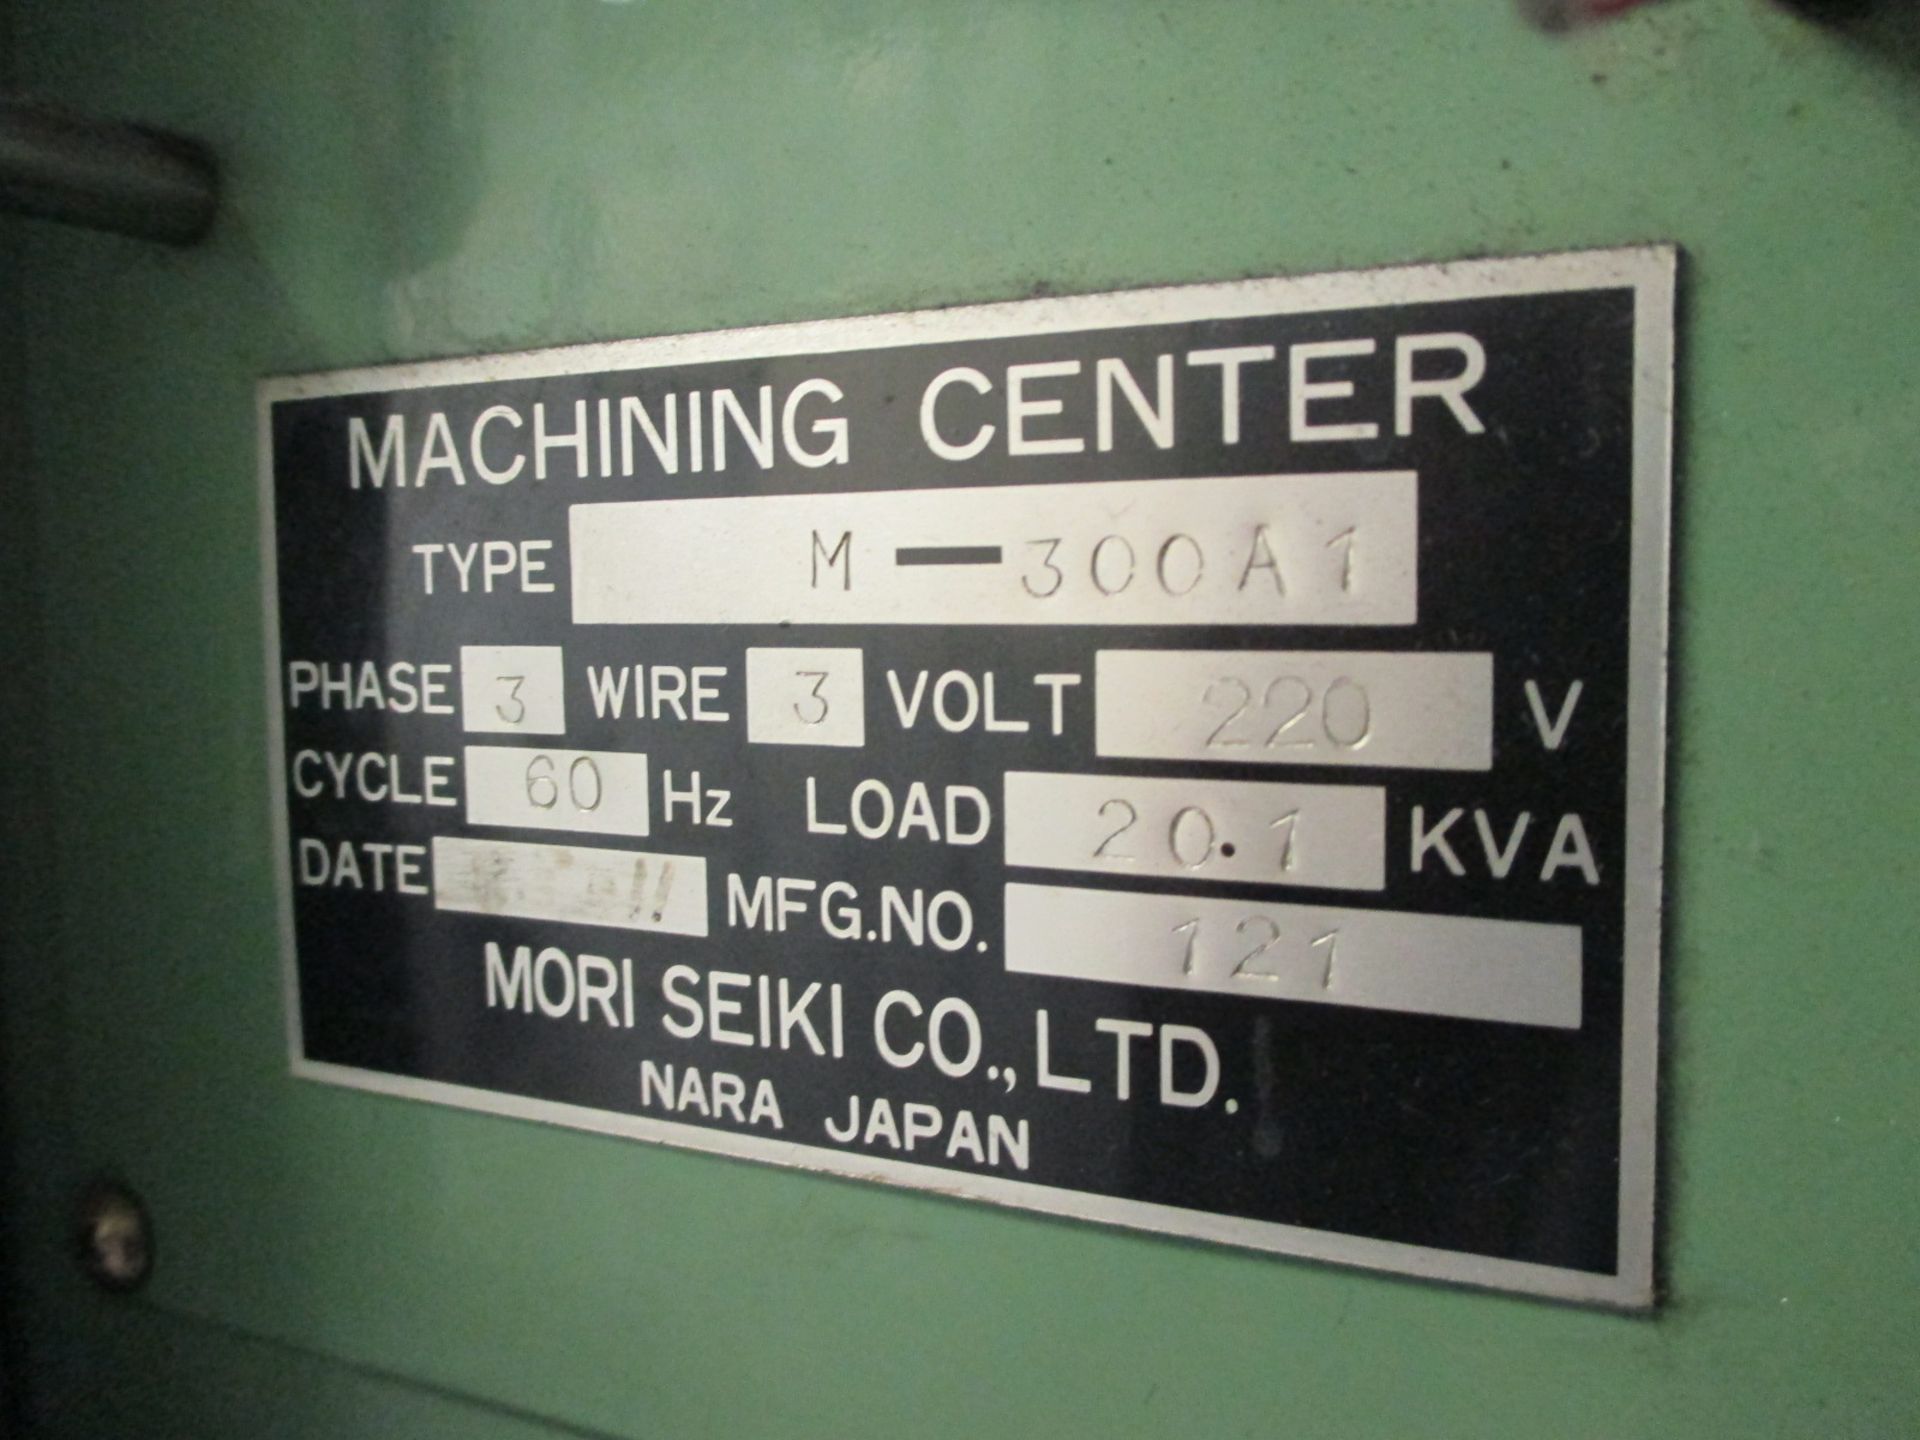 MORI SEIKI M-300A1-1E TWIN PALLET CNC MACHINING CENTER, YEAR 1987, SN 121, LOCATION MI - Image 6 of 6